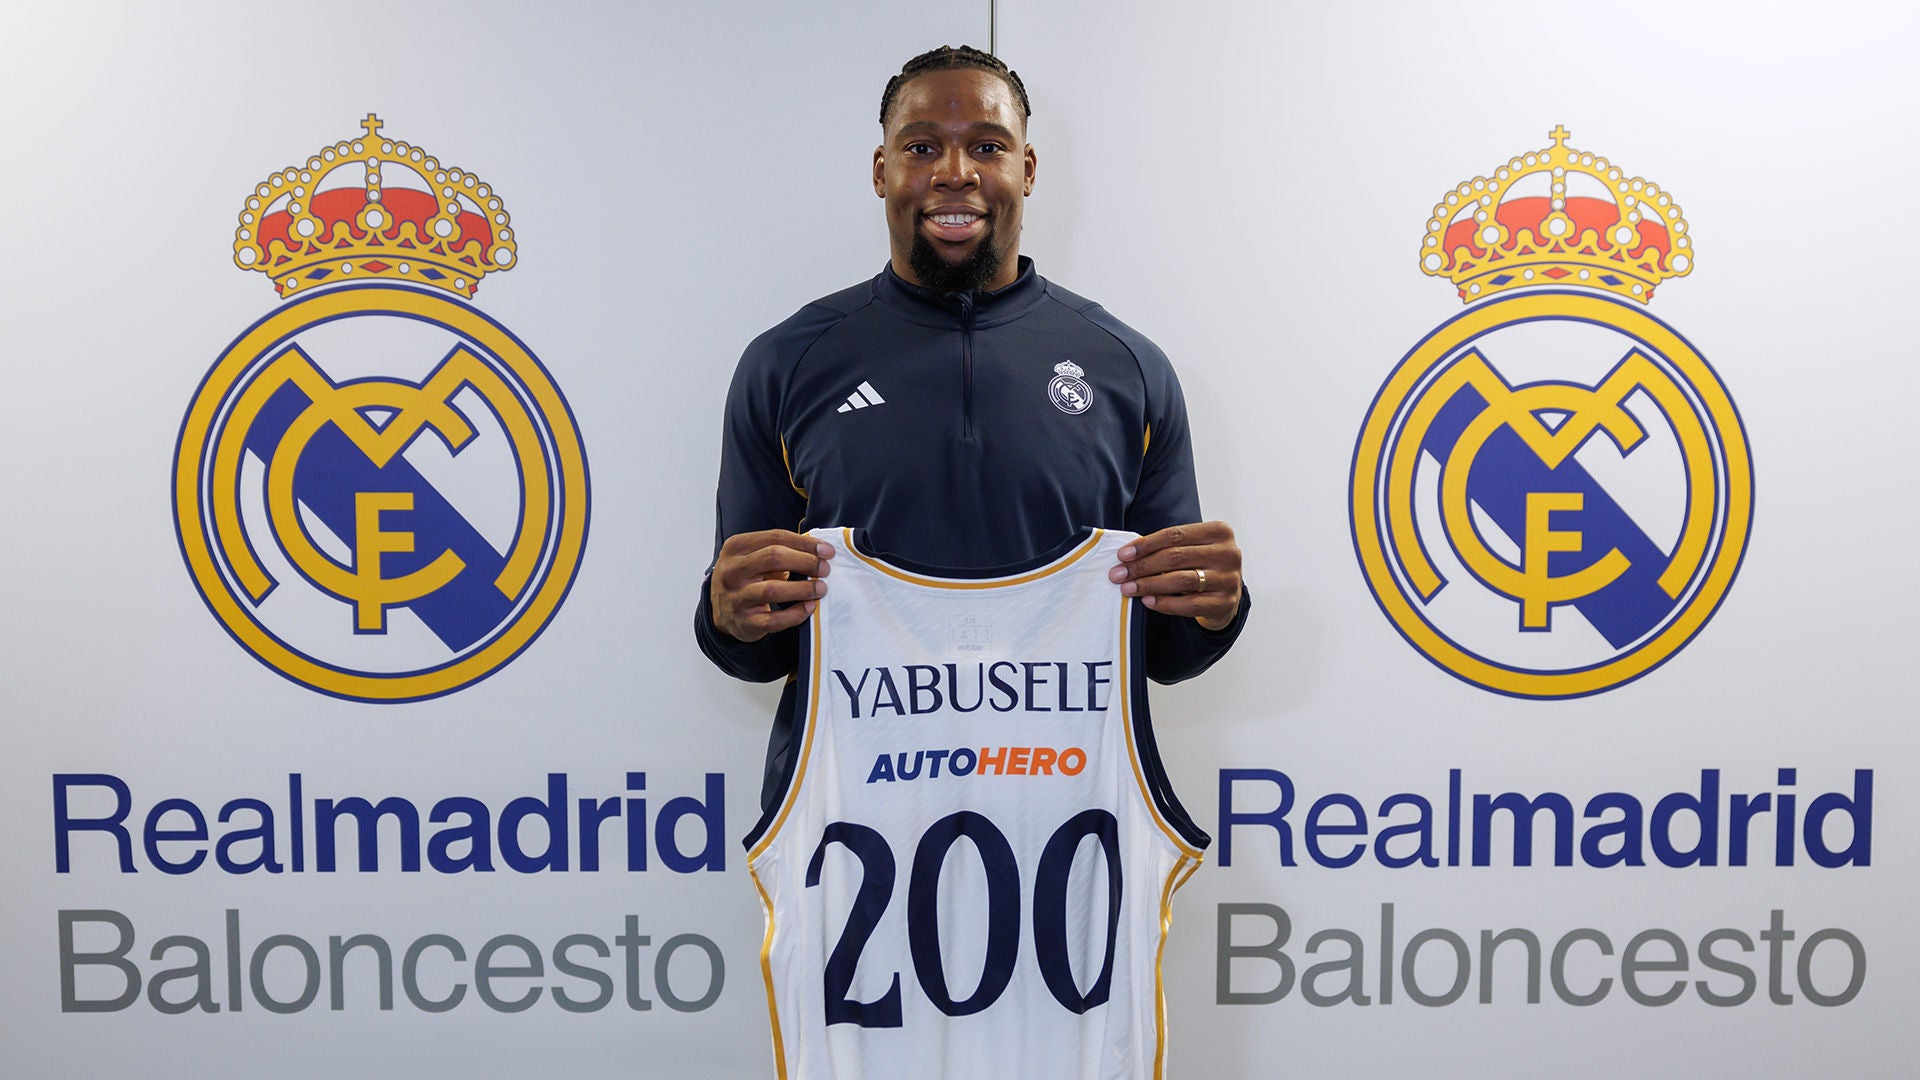 Yabusele makes his 200th Real Madrid appearance